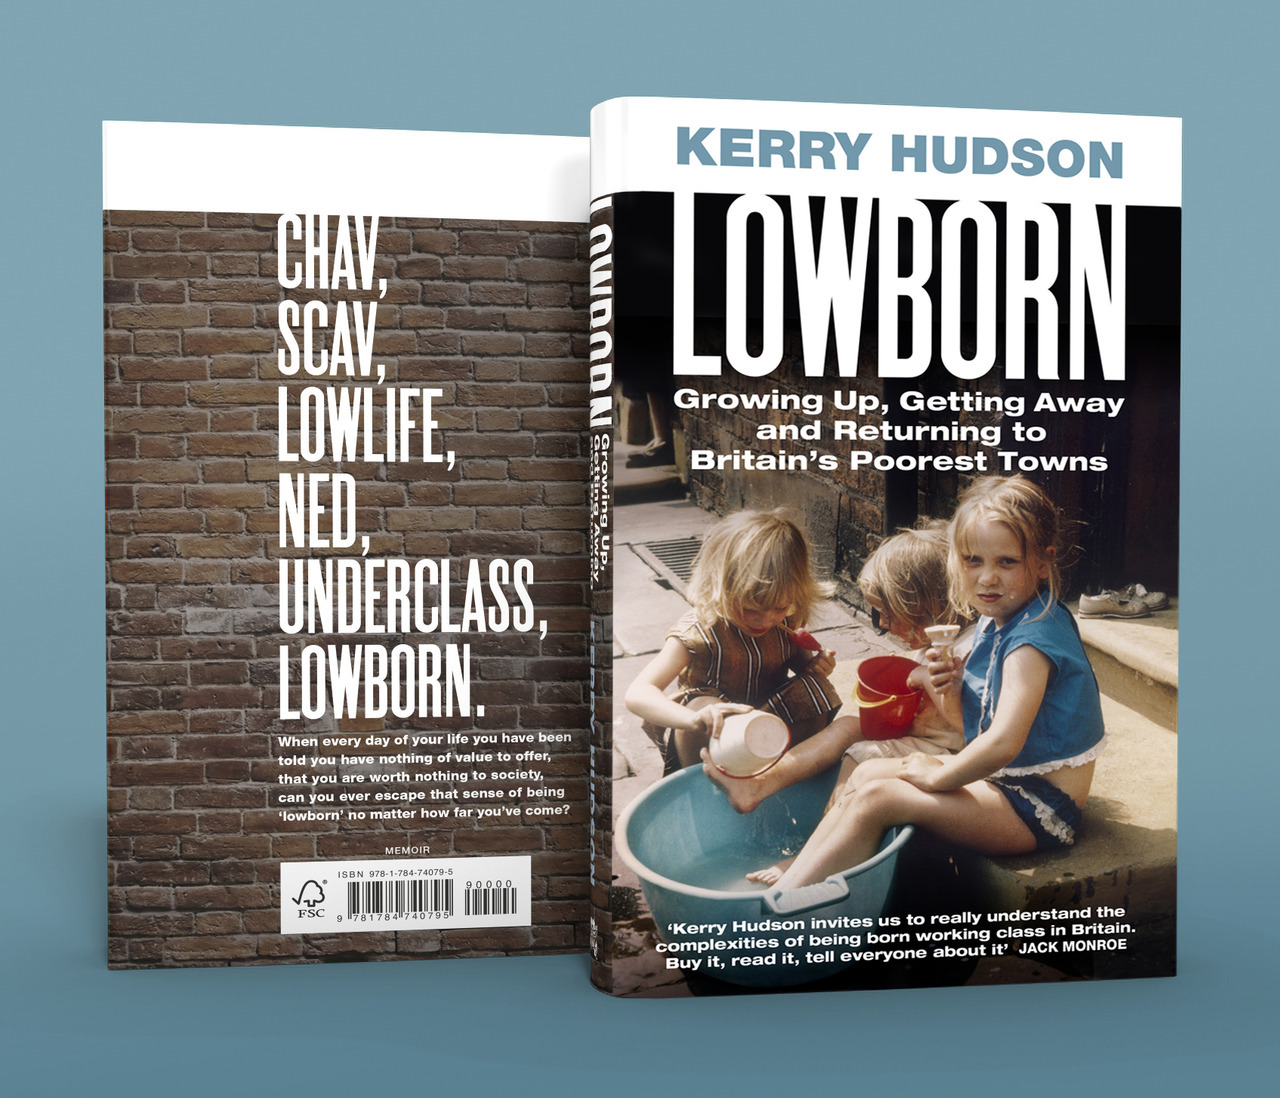 lowborn by kerry hudson